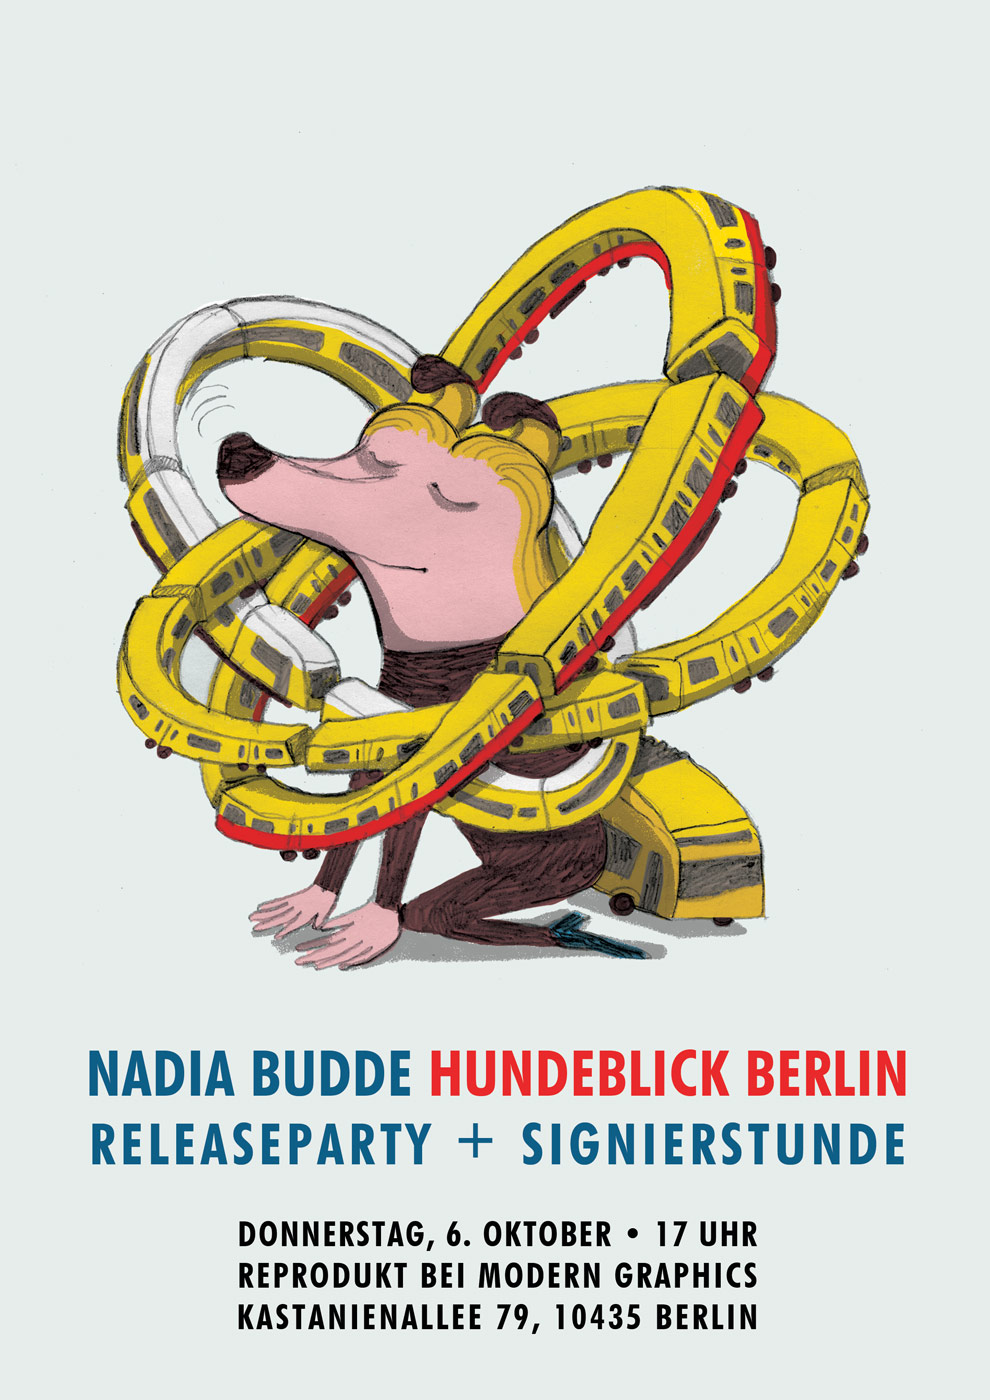 Hundeblick berlin: Releaseparty und Signierstunde mit Nadia Budde, 06.10.22, 17.00 Uhr, Modern Graphics, Kastanienallee 79, 10435 Berlin.